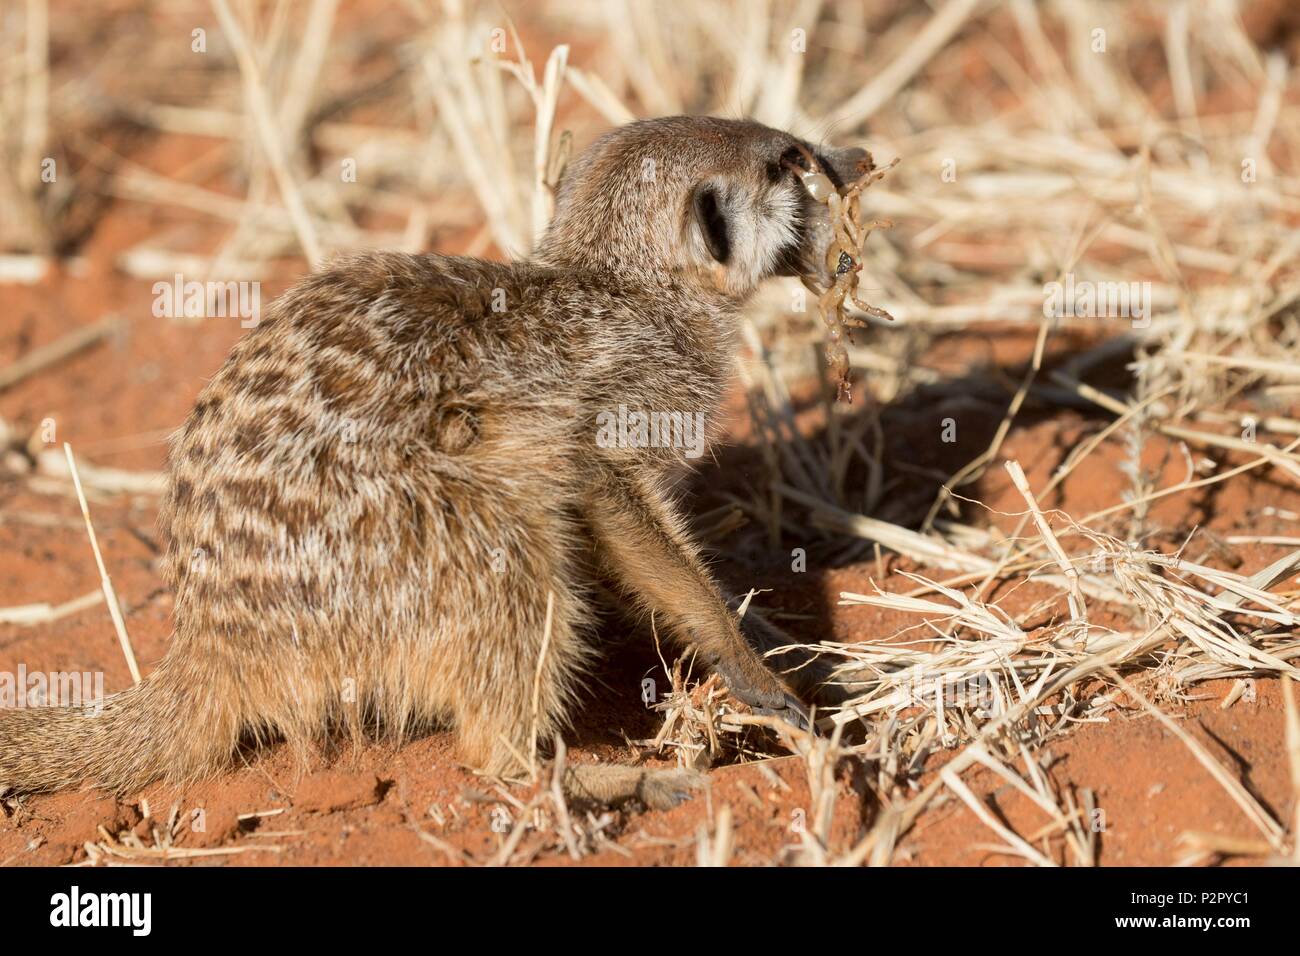 South Africa, Kalahari Desert, Meerkat or suricate (Suricata suricatta), adult eating a scorpion Stock Photo